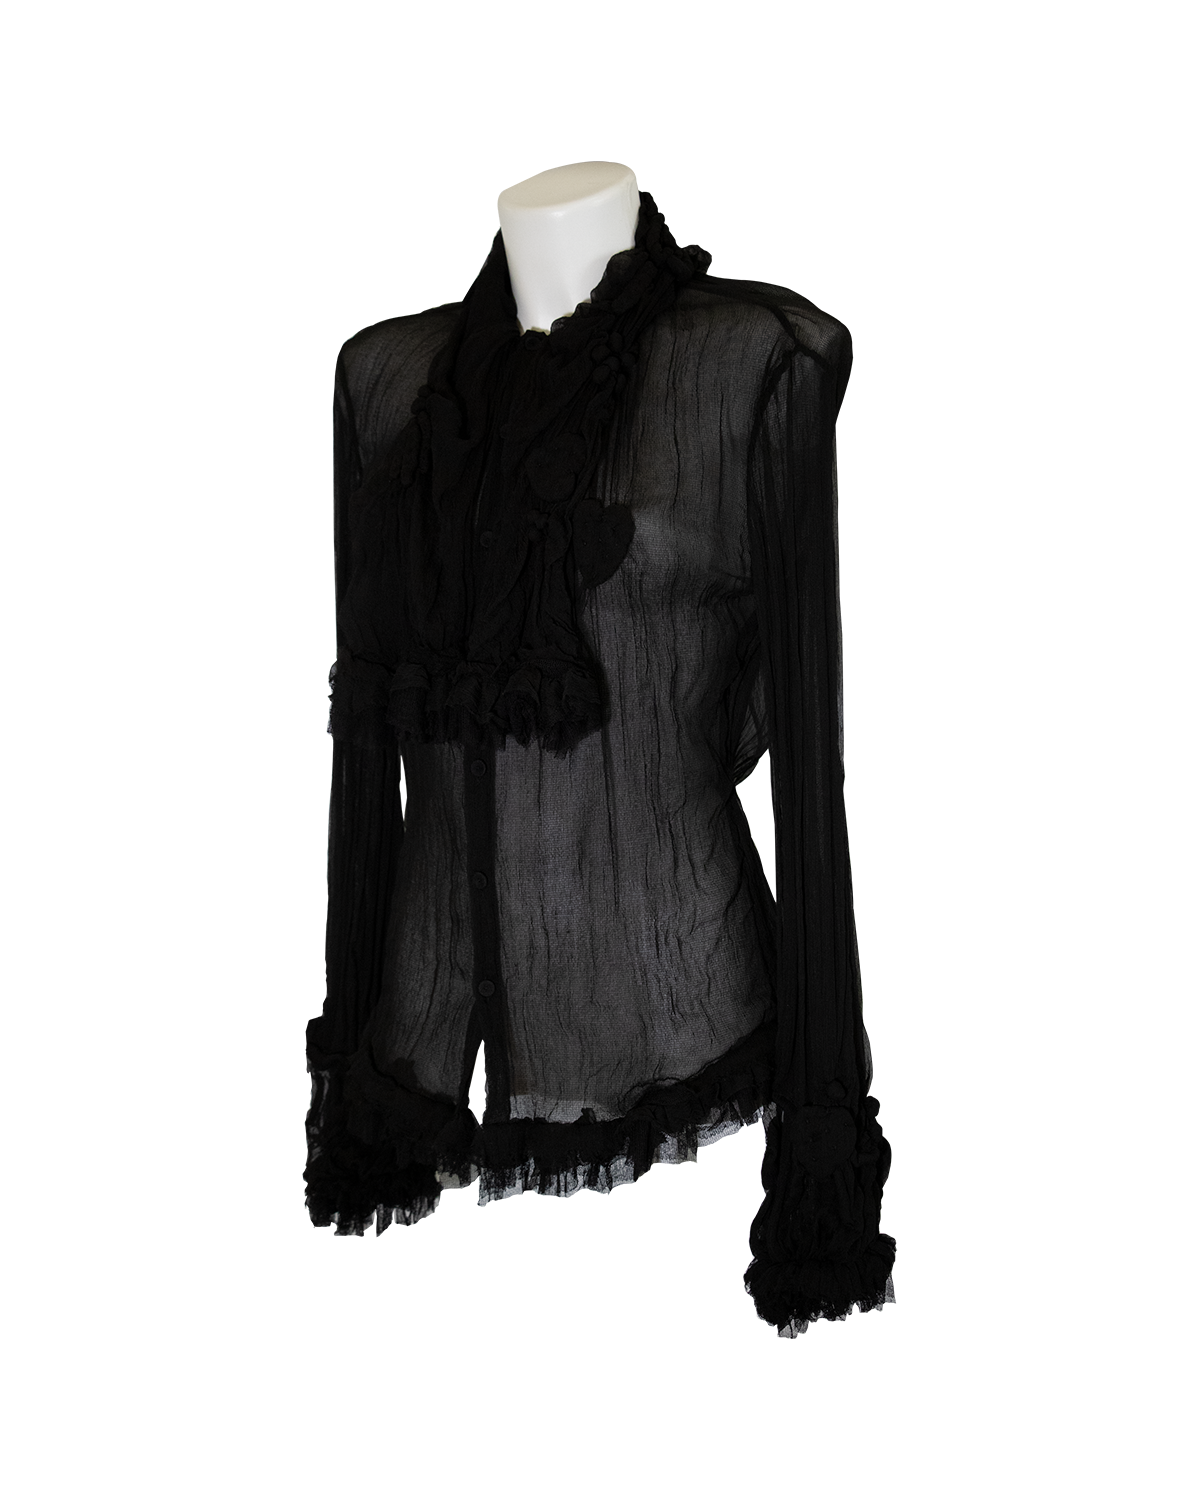 Jean Paul Gaultier Black Shirt from 1990s